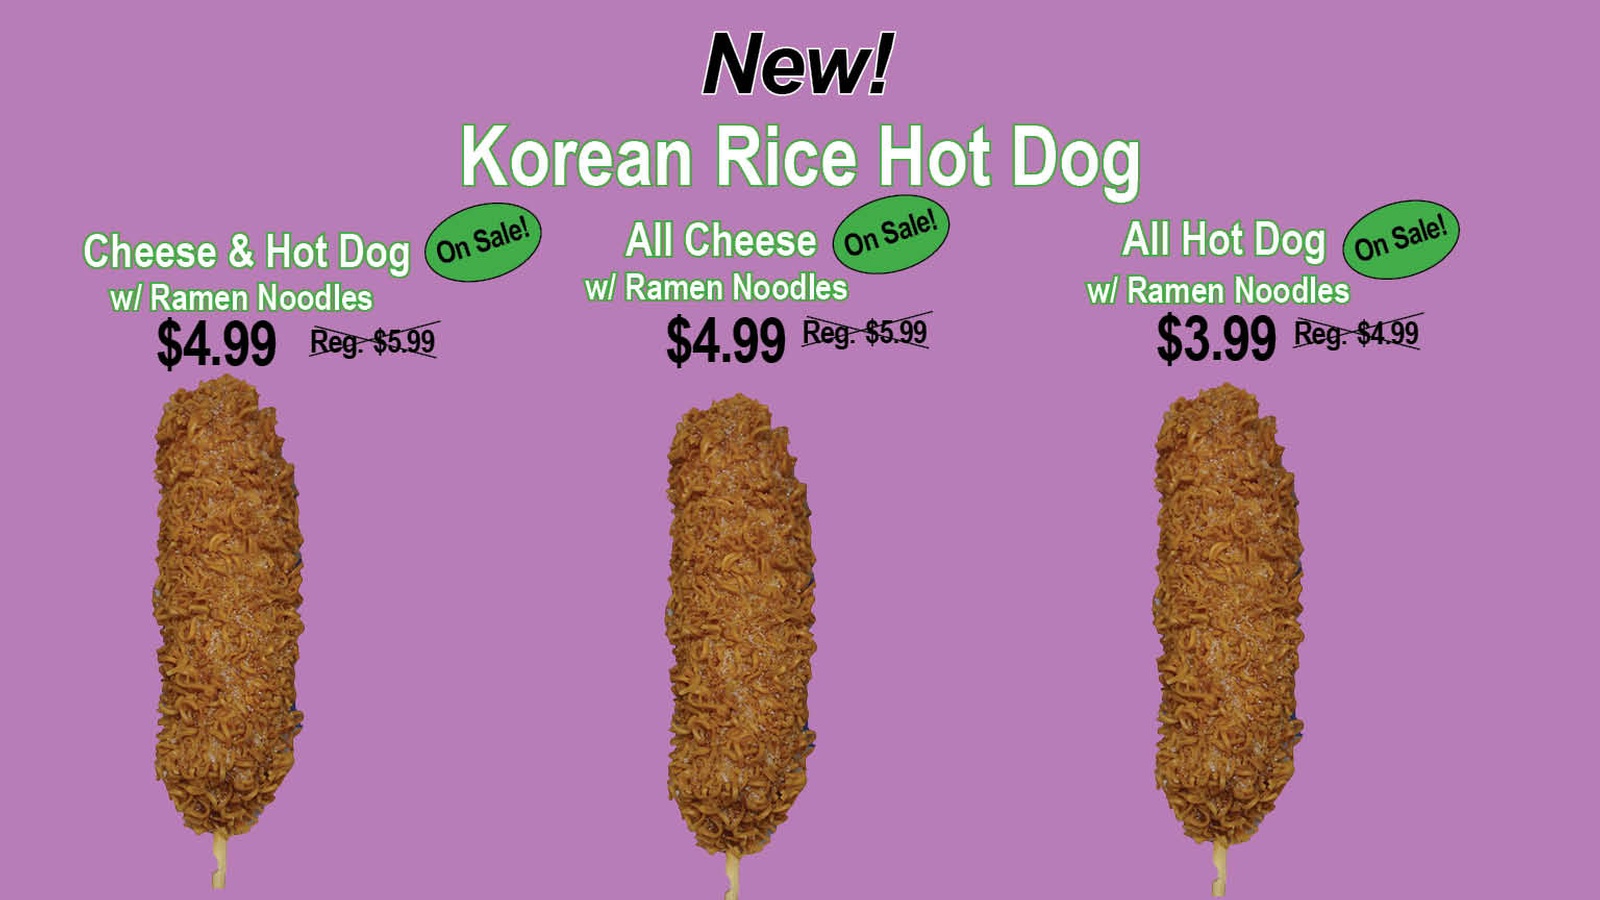 Korean Rice Hot Dog with Ramen Noodles